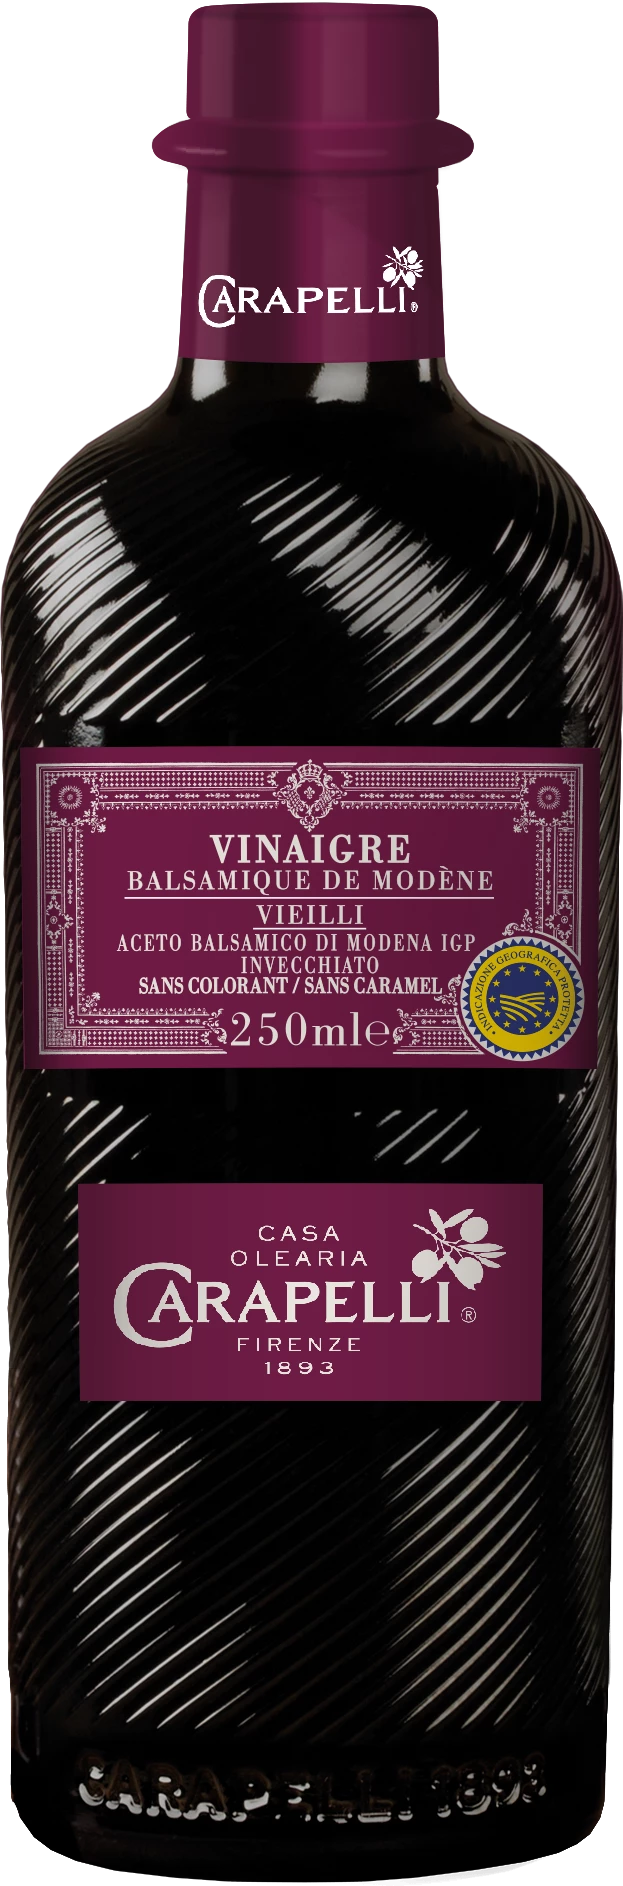 Balsamic vinegar of modene vielli 250ml - CARAPELLI